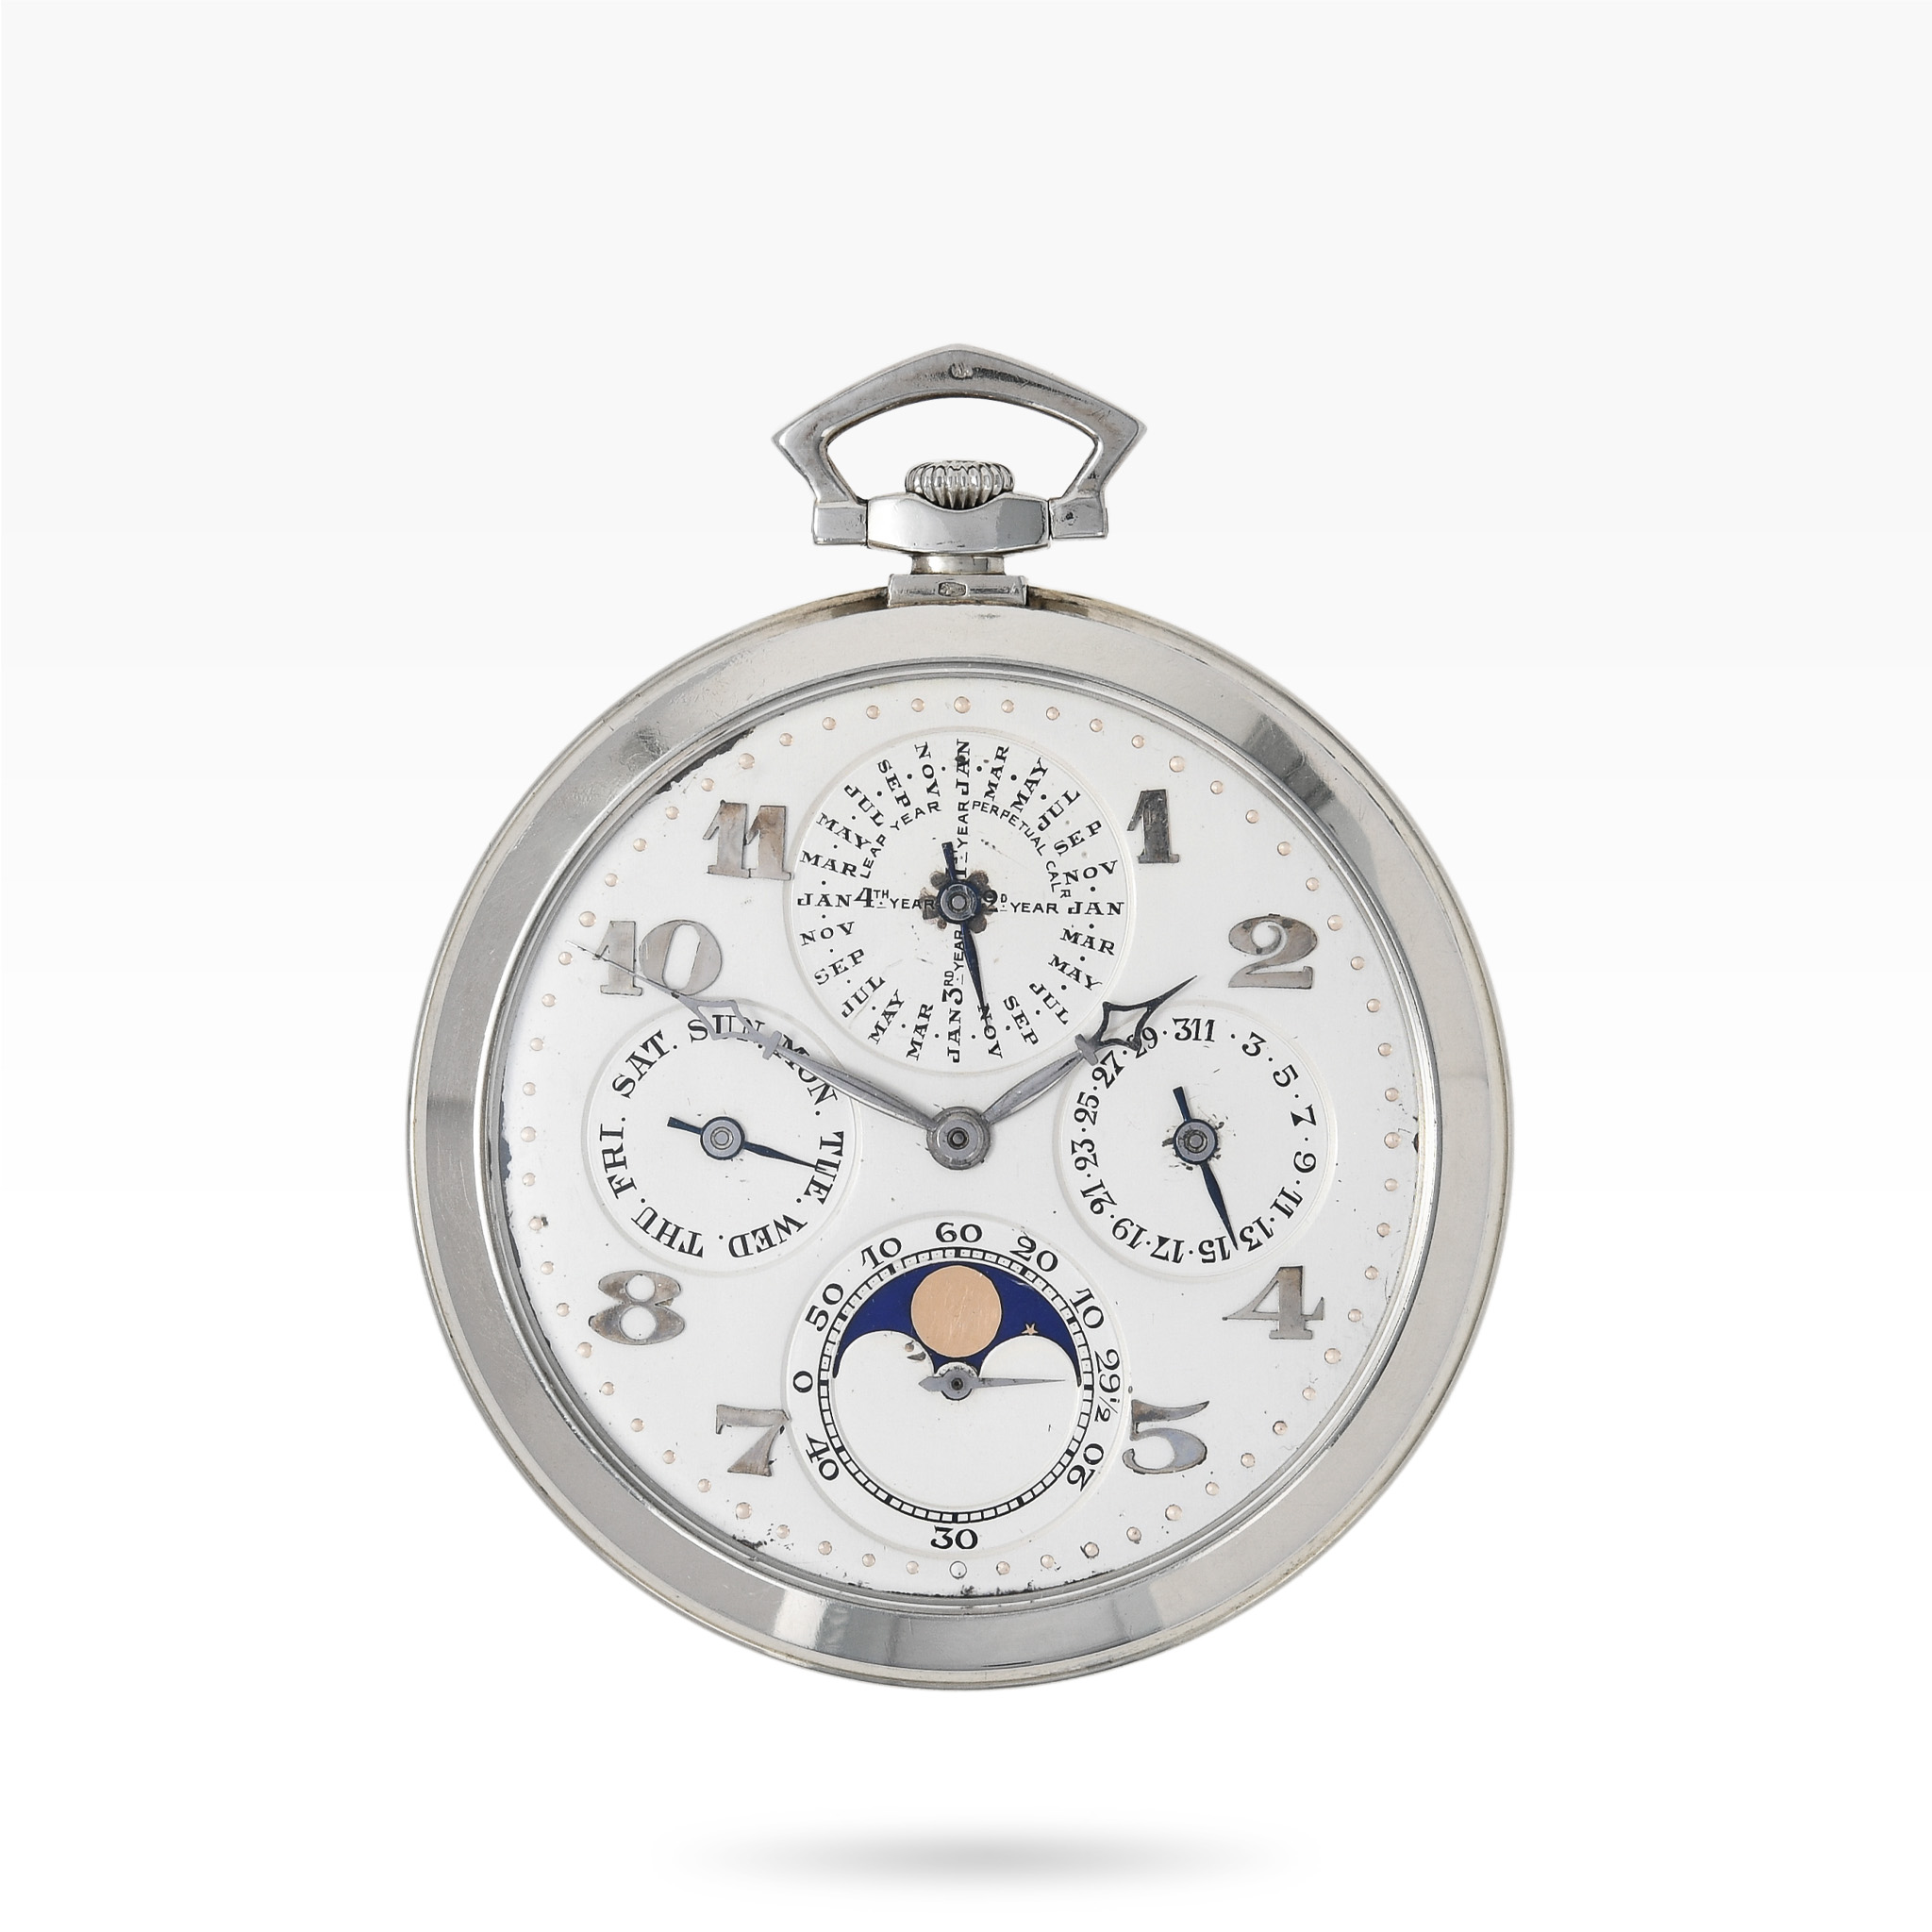 0921ap1-audemars-piguet-white-gold-perpetual-calendar-pocket-watch-img-main1